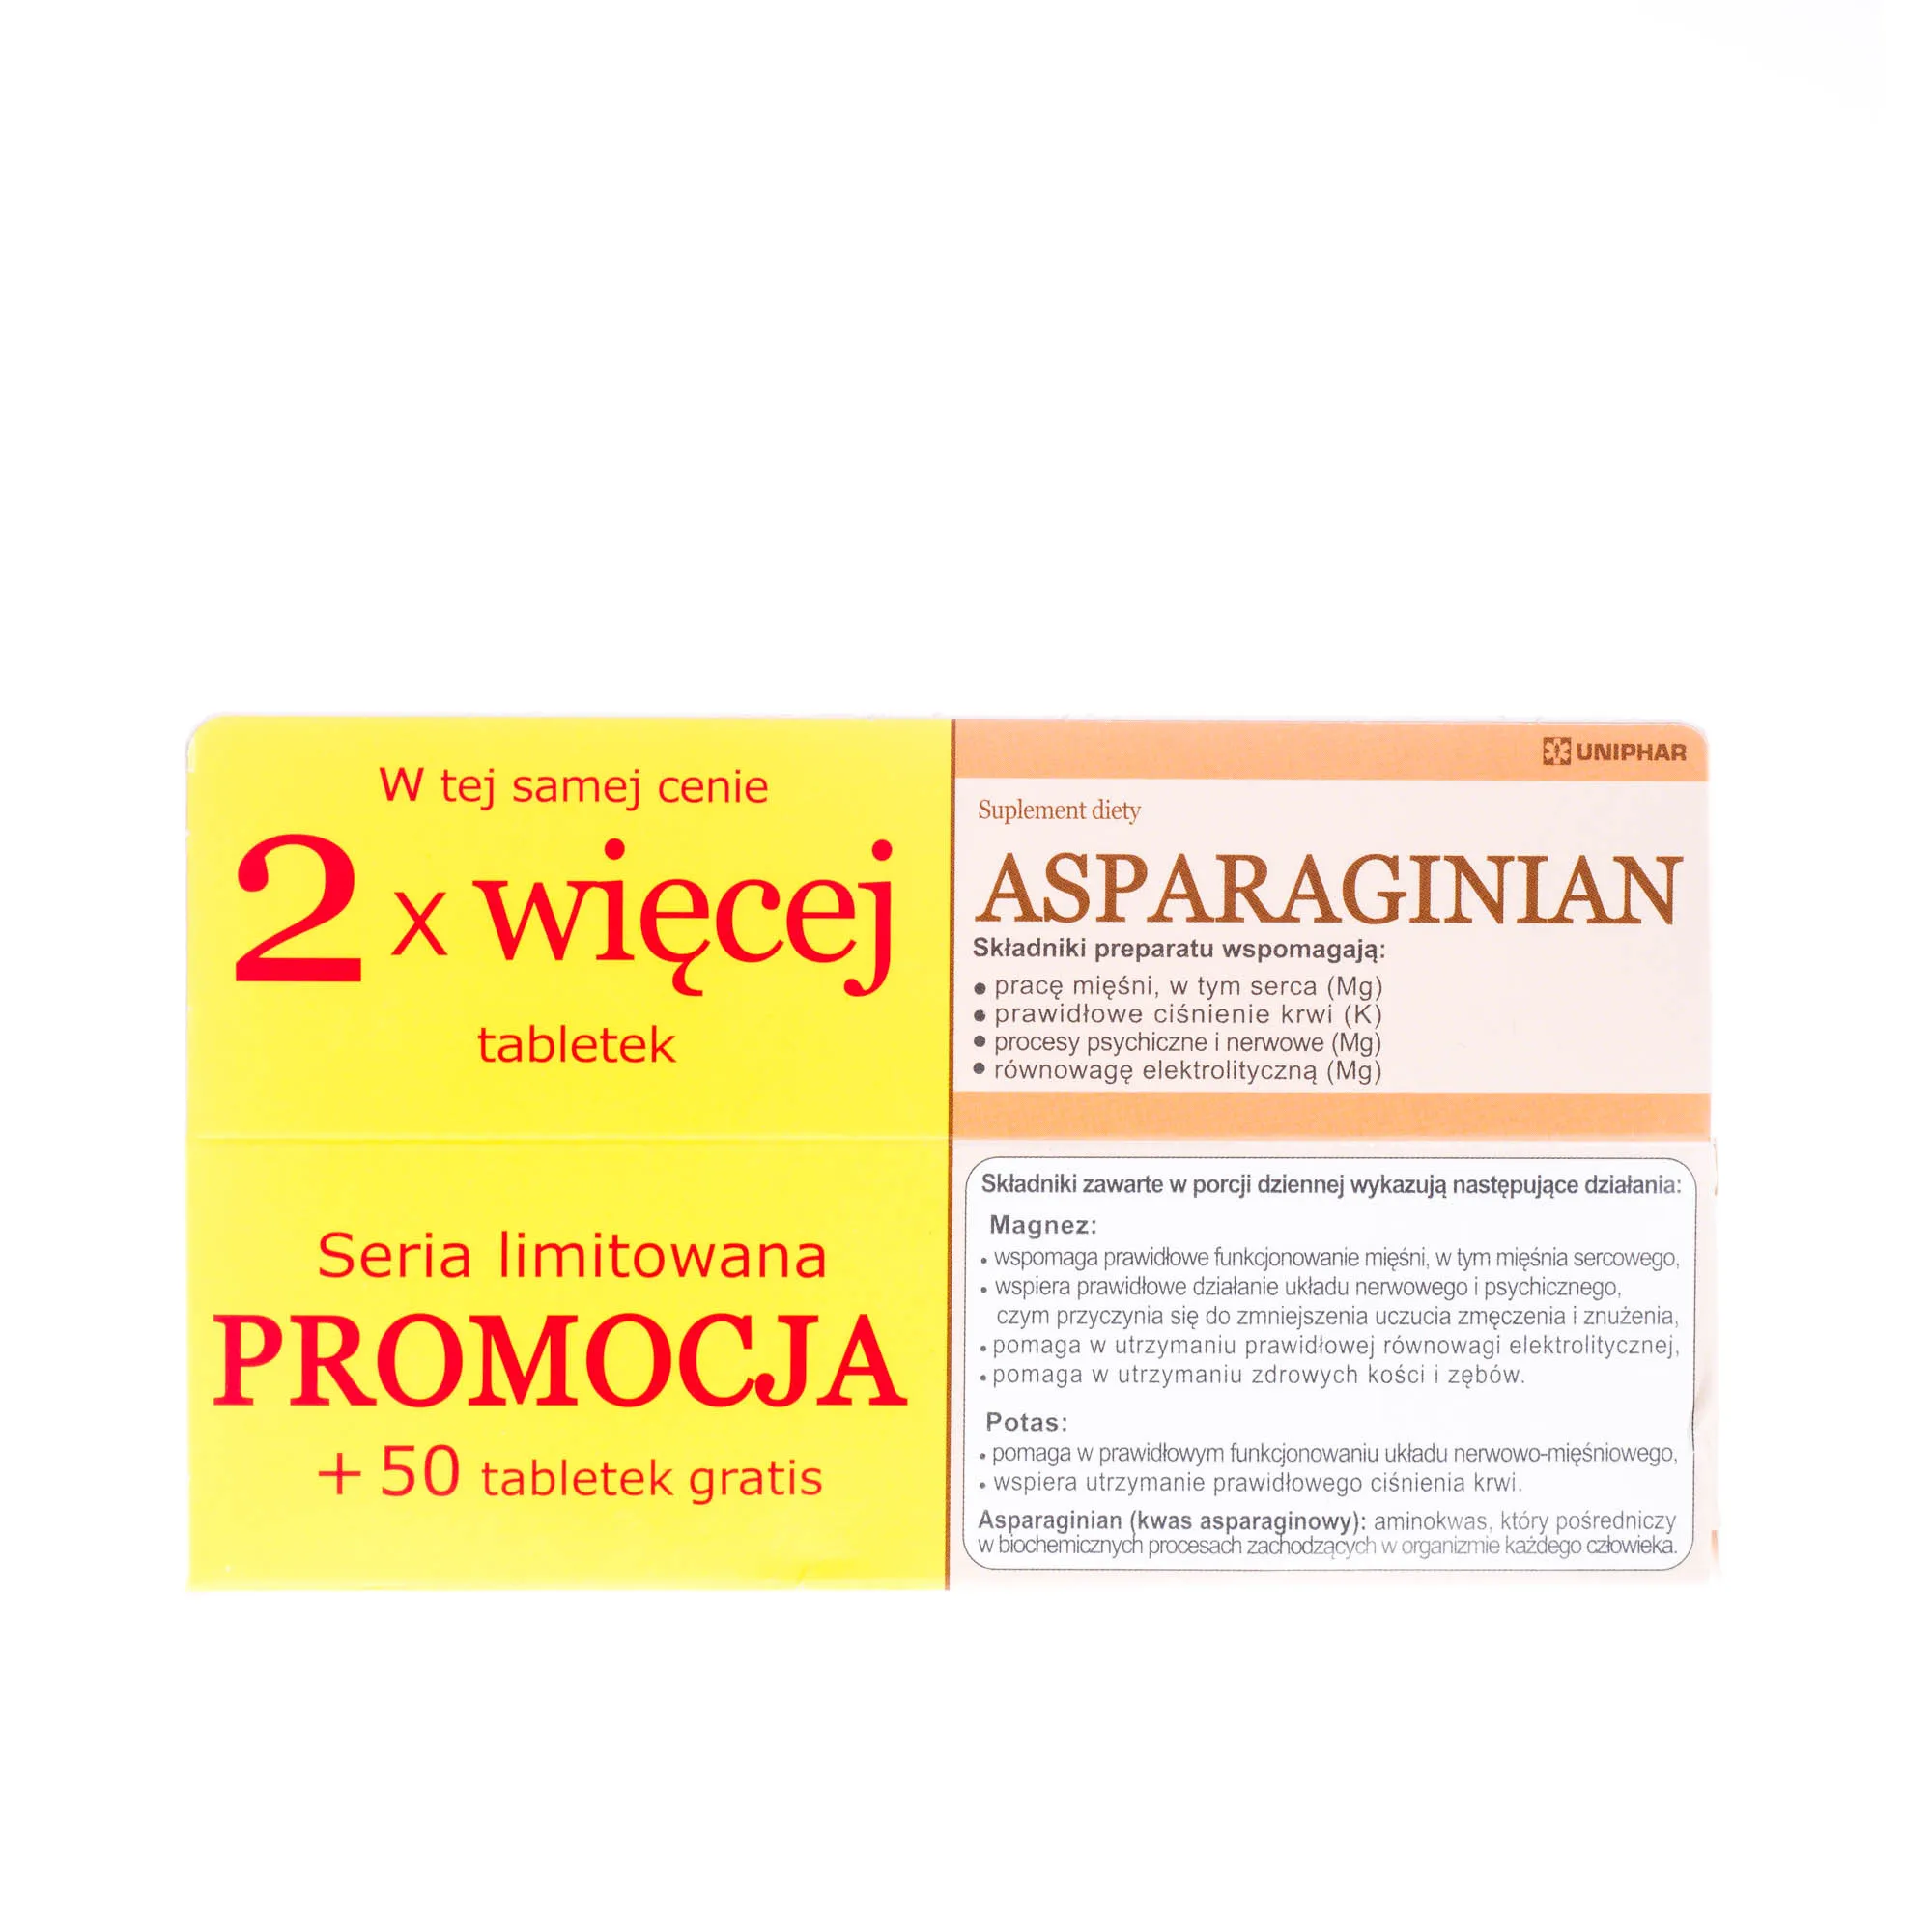 Asparaginian, suplement diety, 100 tabletek 